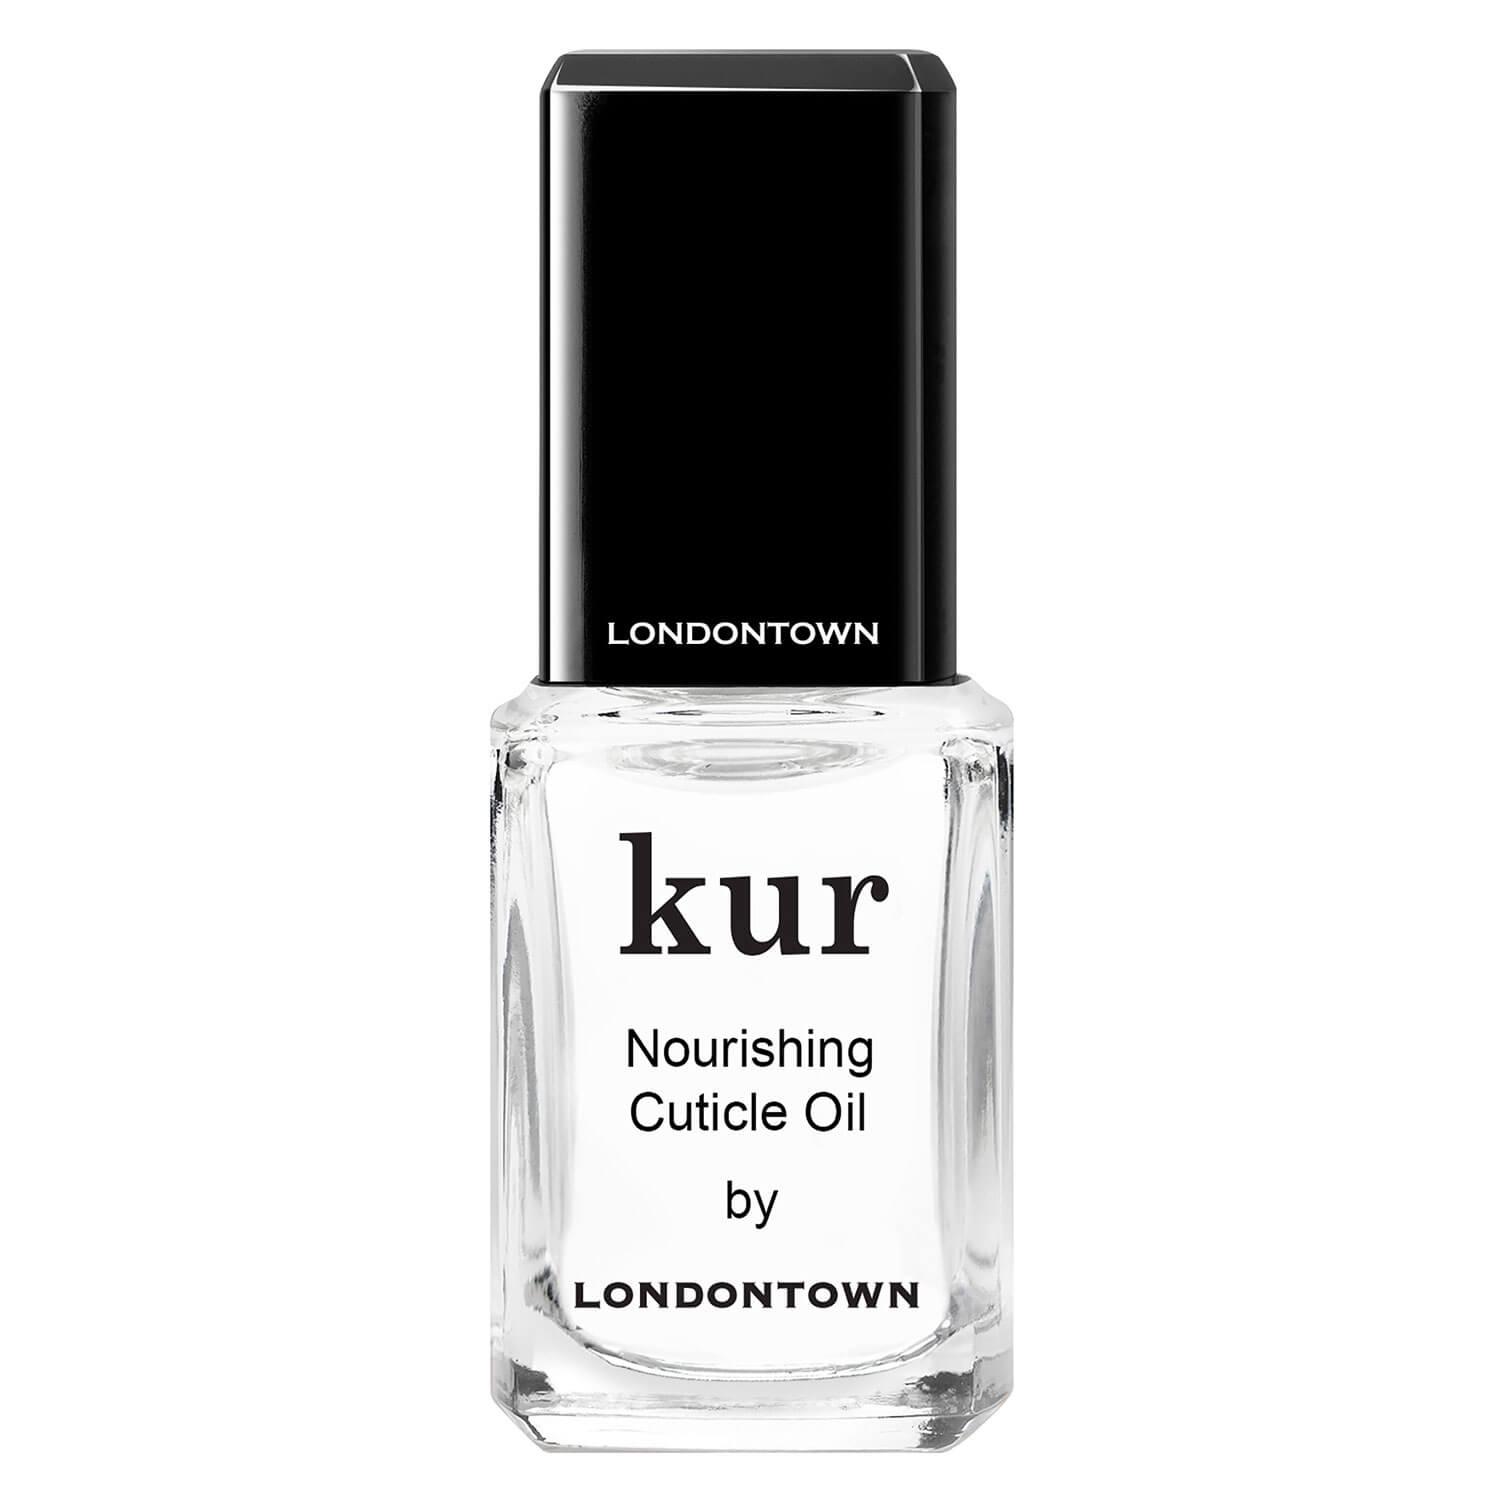 kur - Nourishing Cuticle Oil